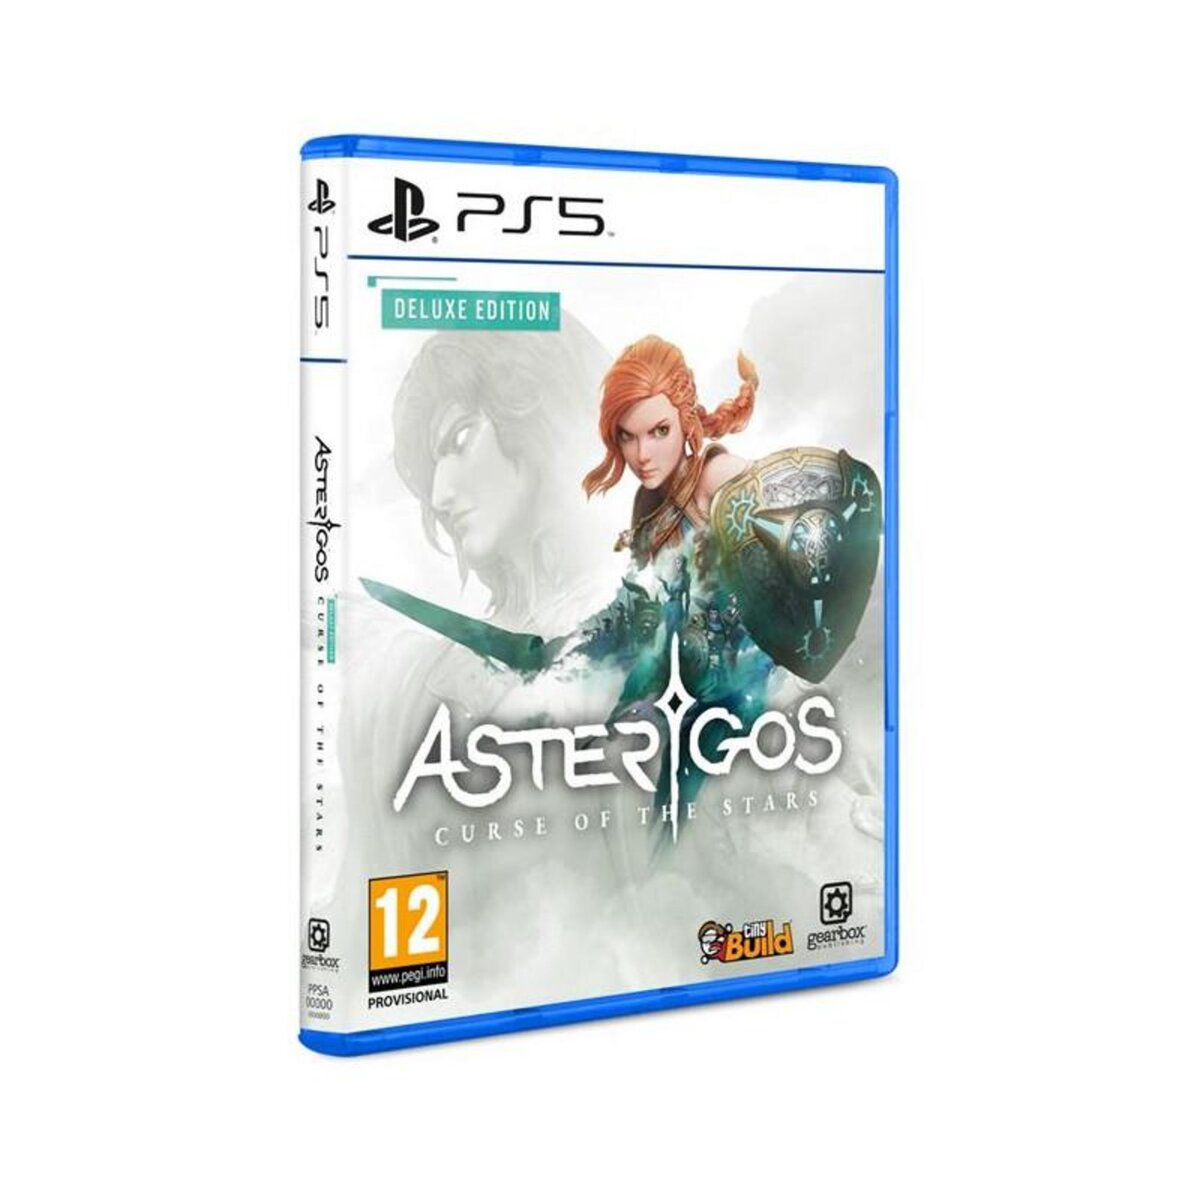 PREMIUM Asterigos  Curse of the Stars Deluxe Edition PS5